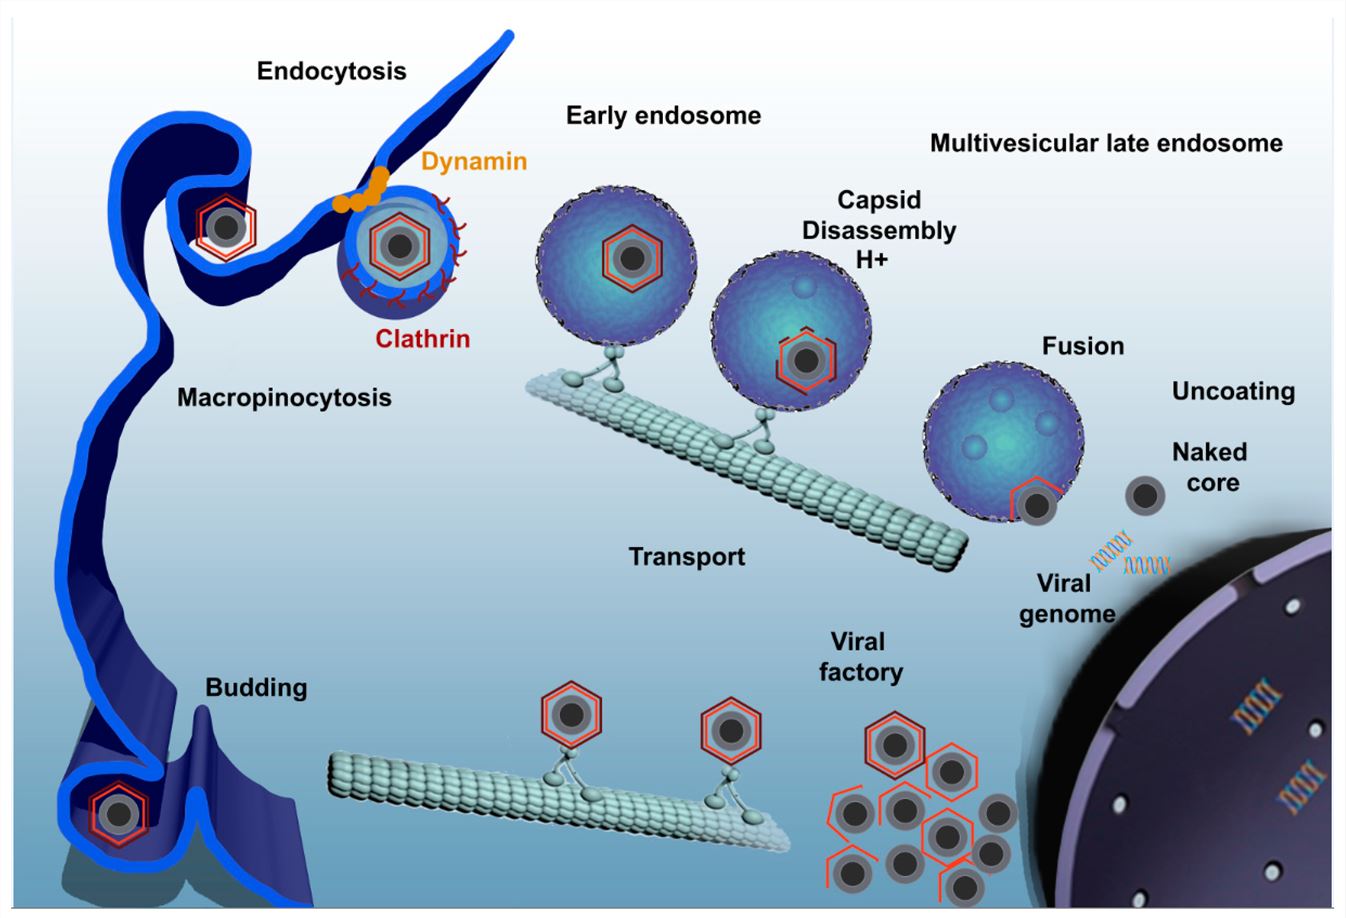 The infection mechanism of Adenovirus.